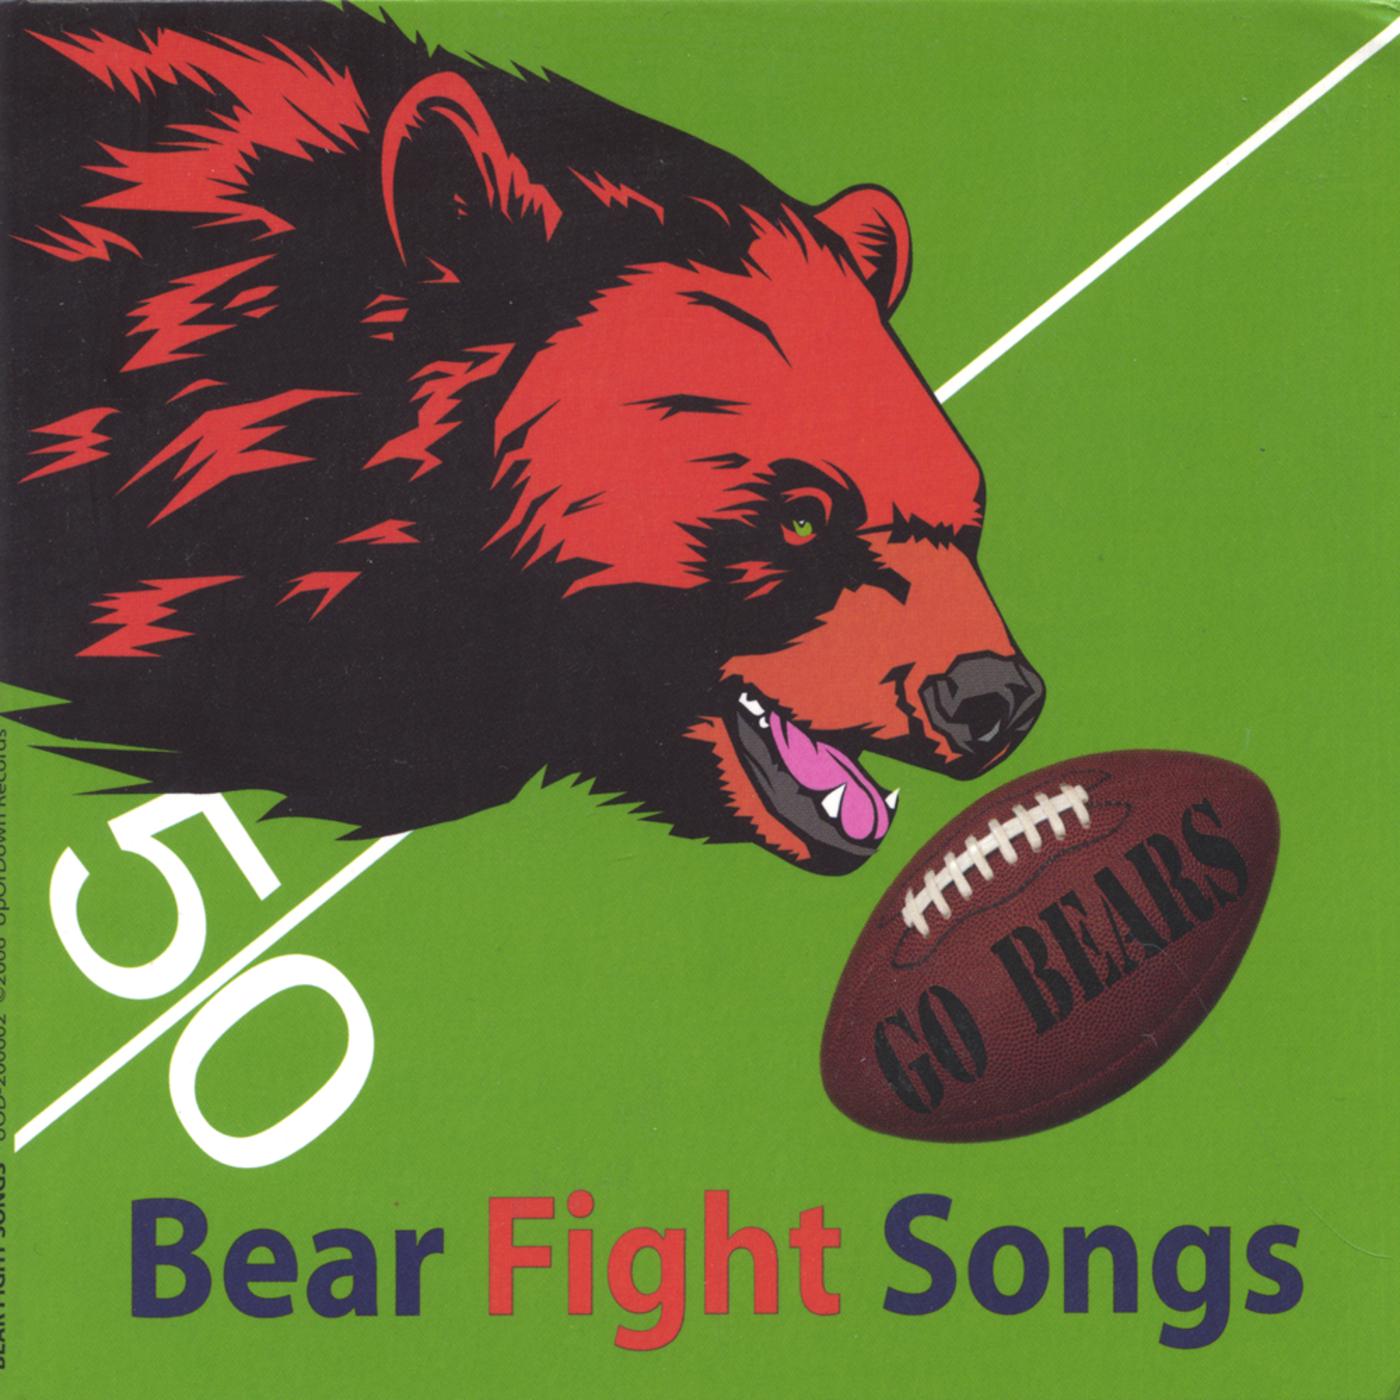 Bear Down, Chicago Bears